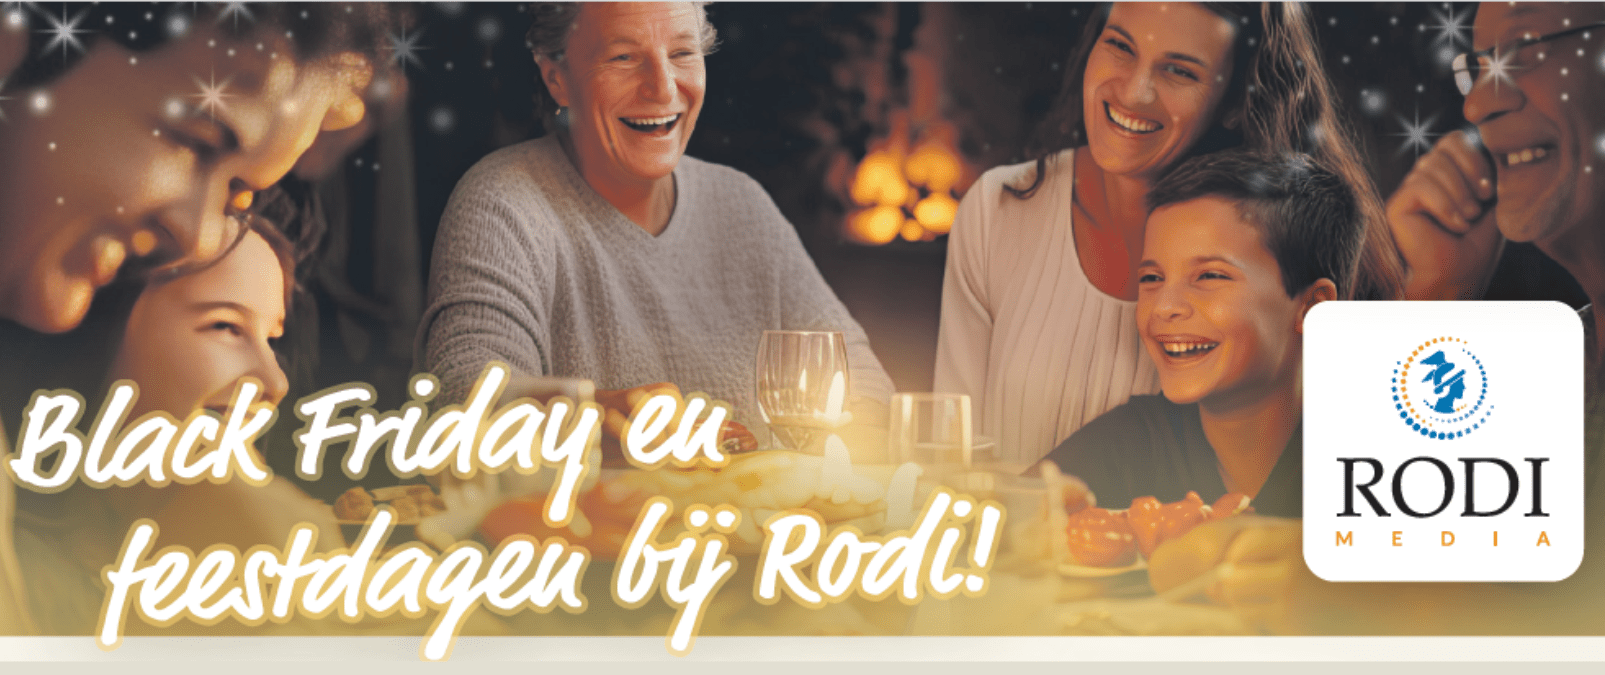 Let it show, let it show: boost je bedrijf deze feestdagen via Rodi!